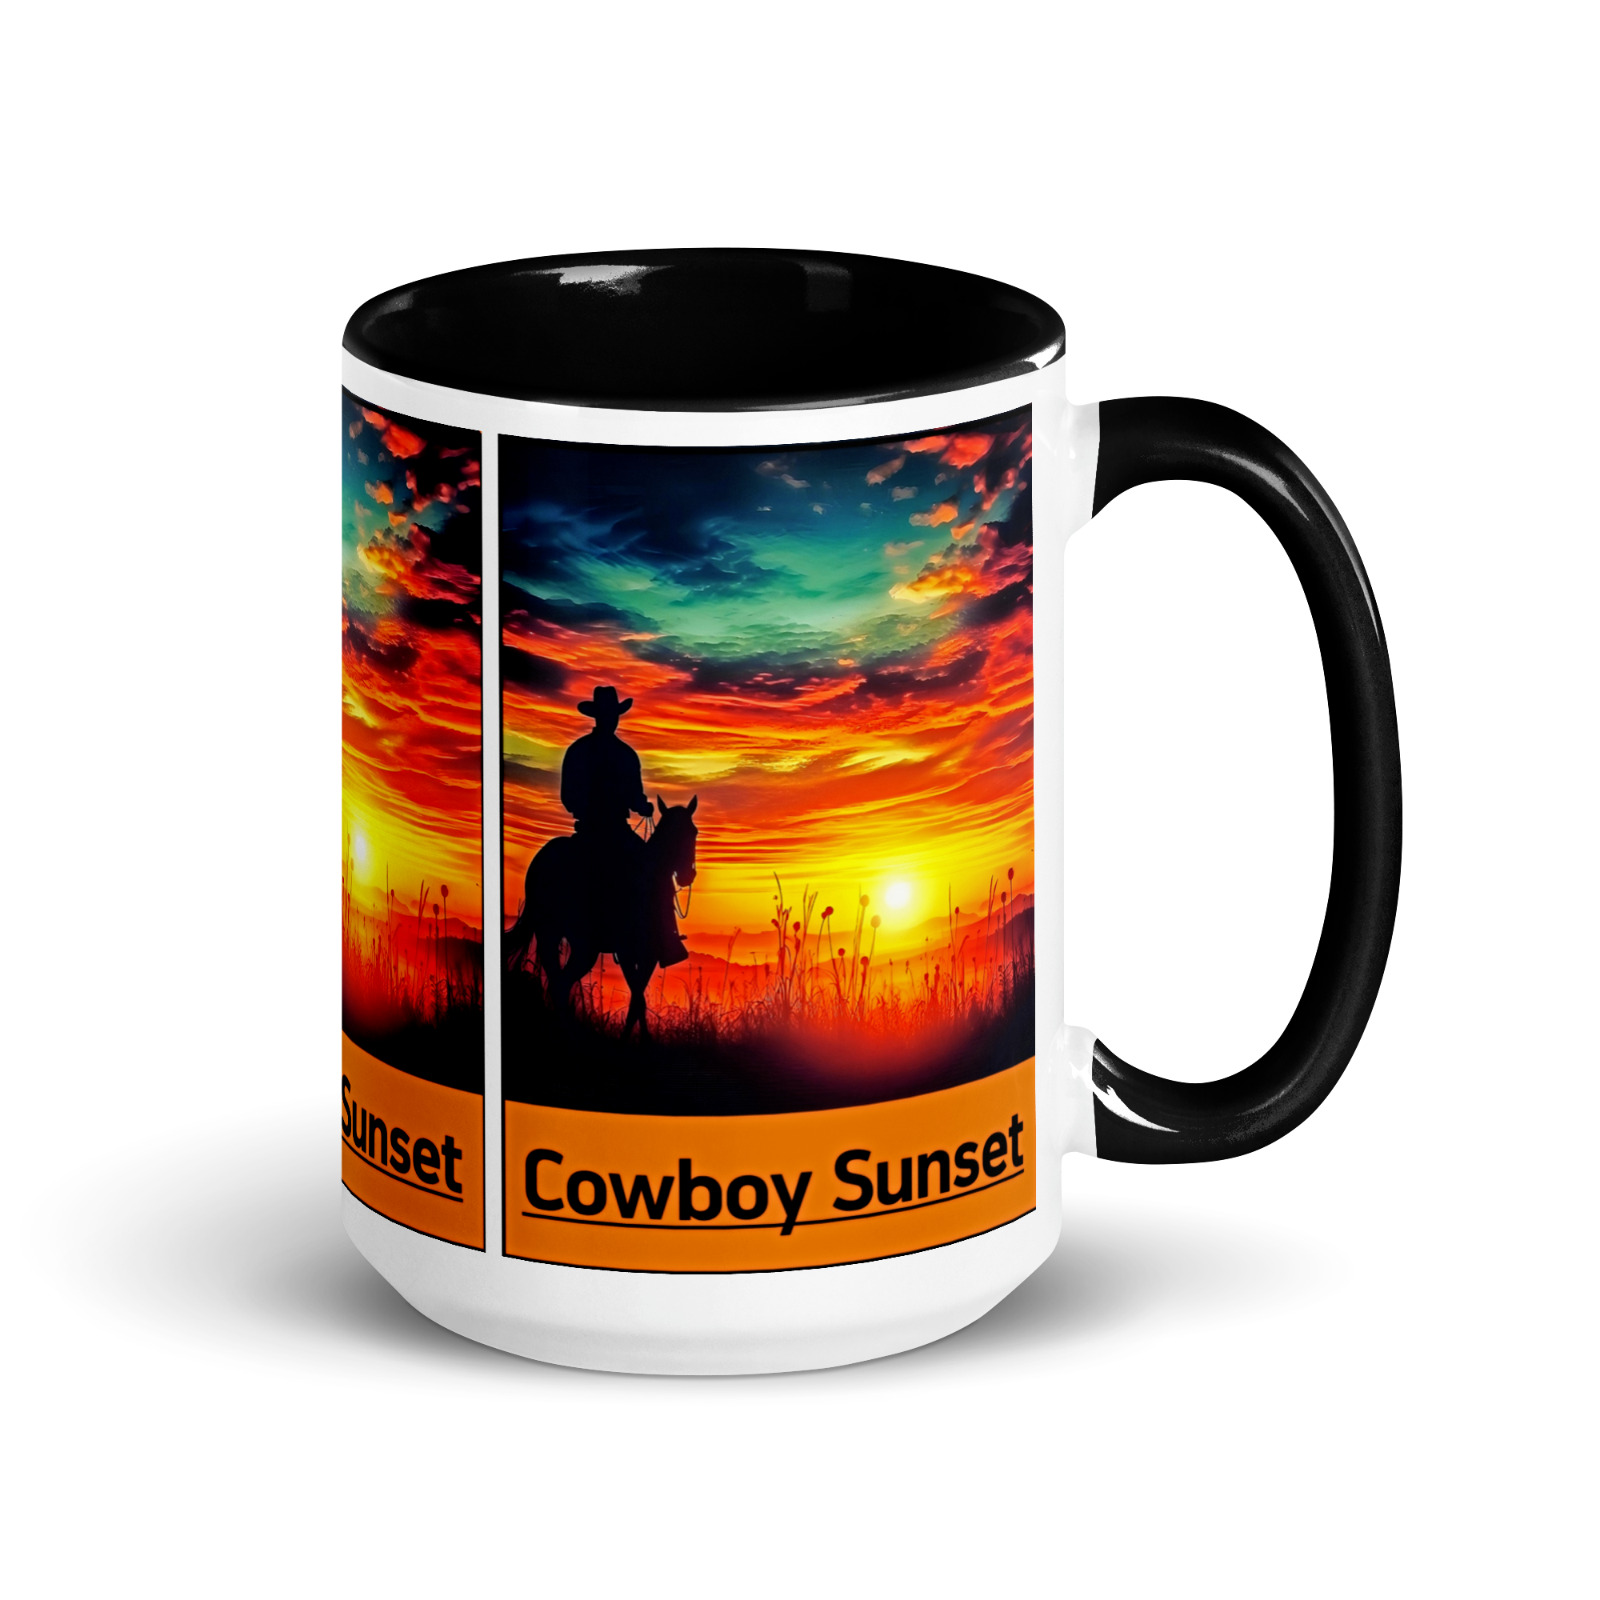 New Coffee Mug 15oz Cowboy Sunset \